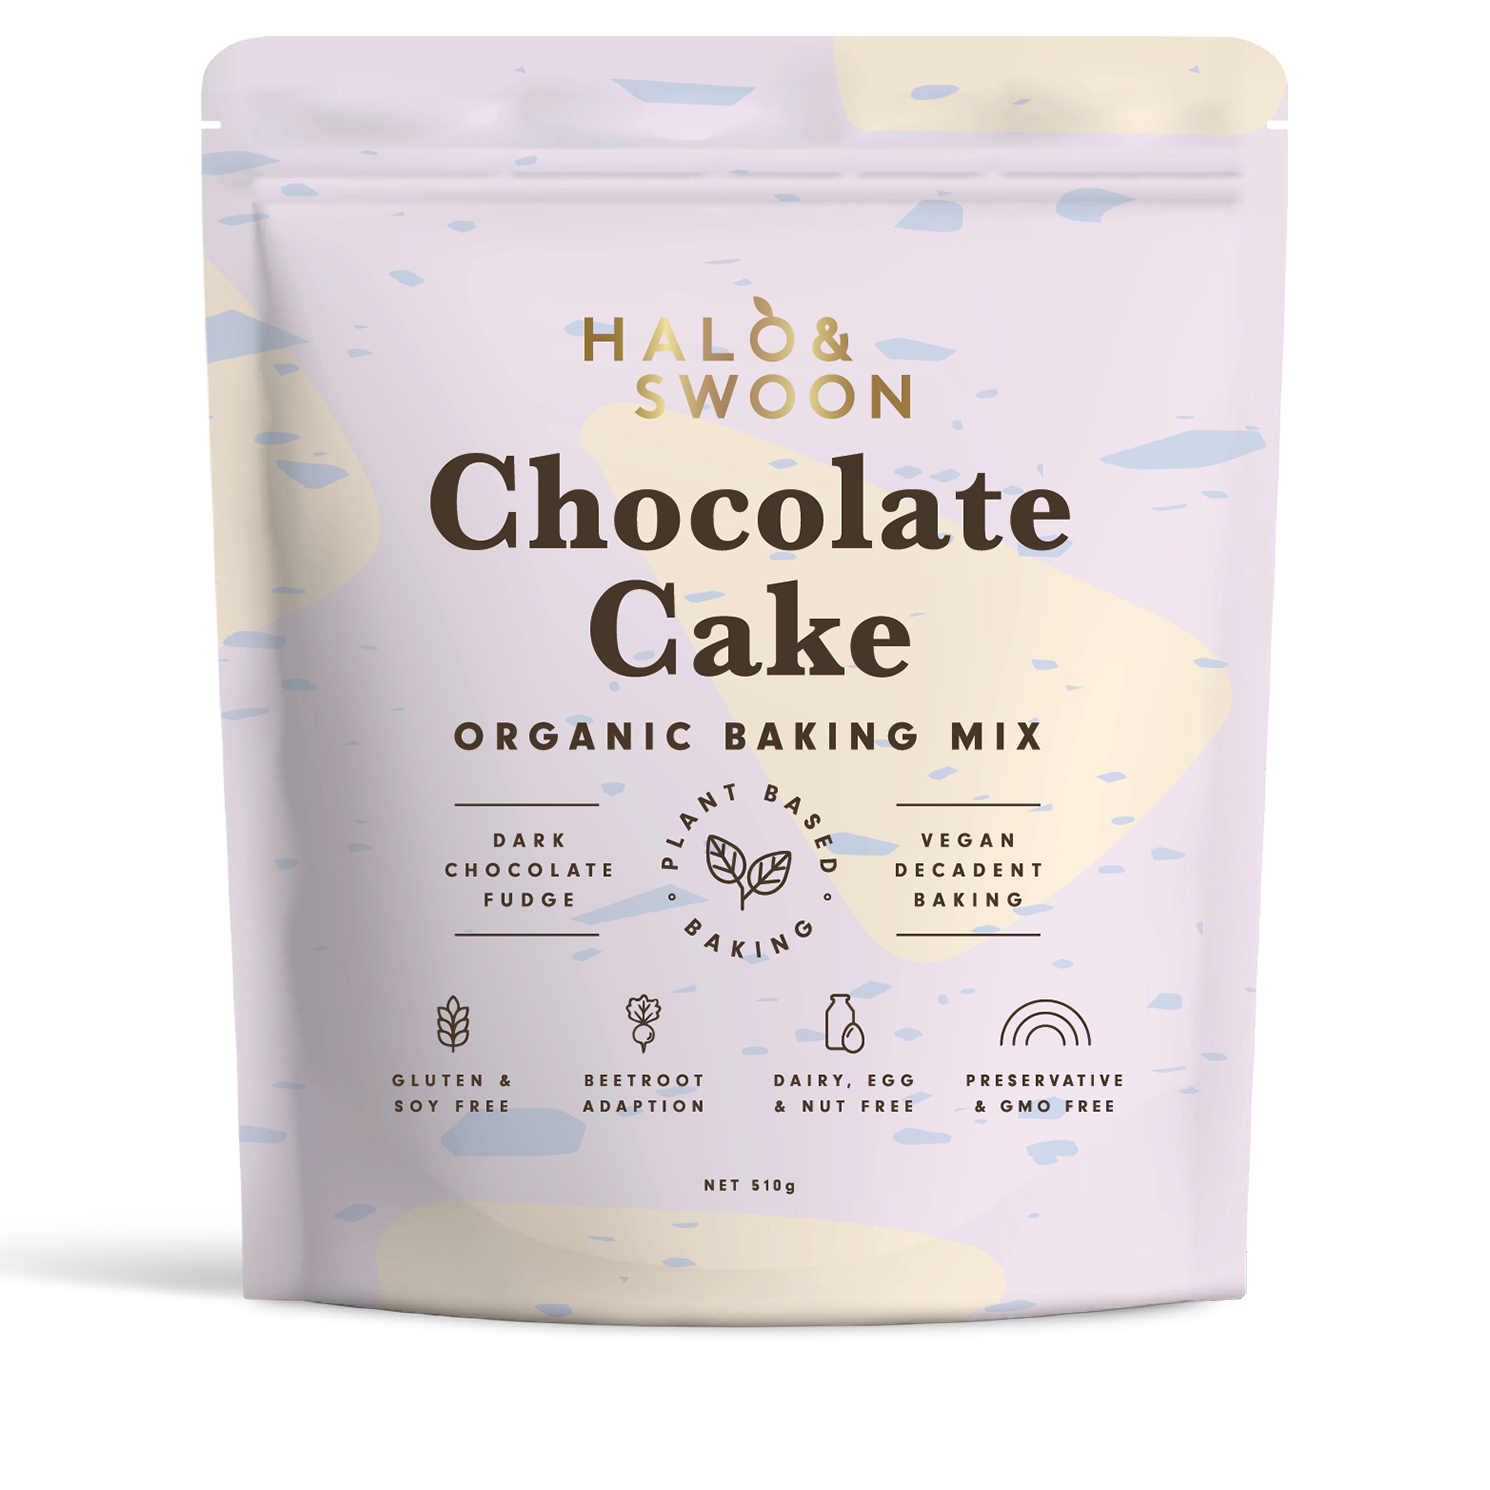 Halo & Swoon Chocolate Cake - organic, vegan, gluten-free baking mix